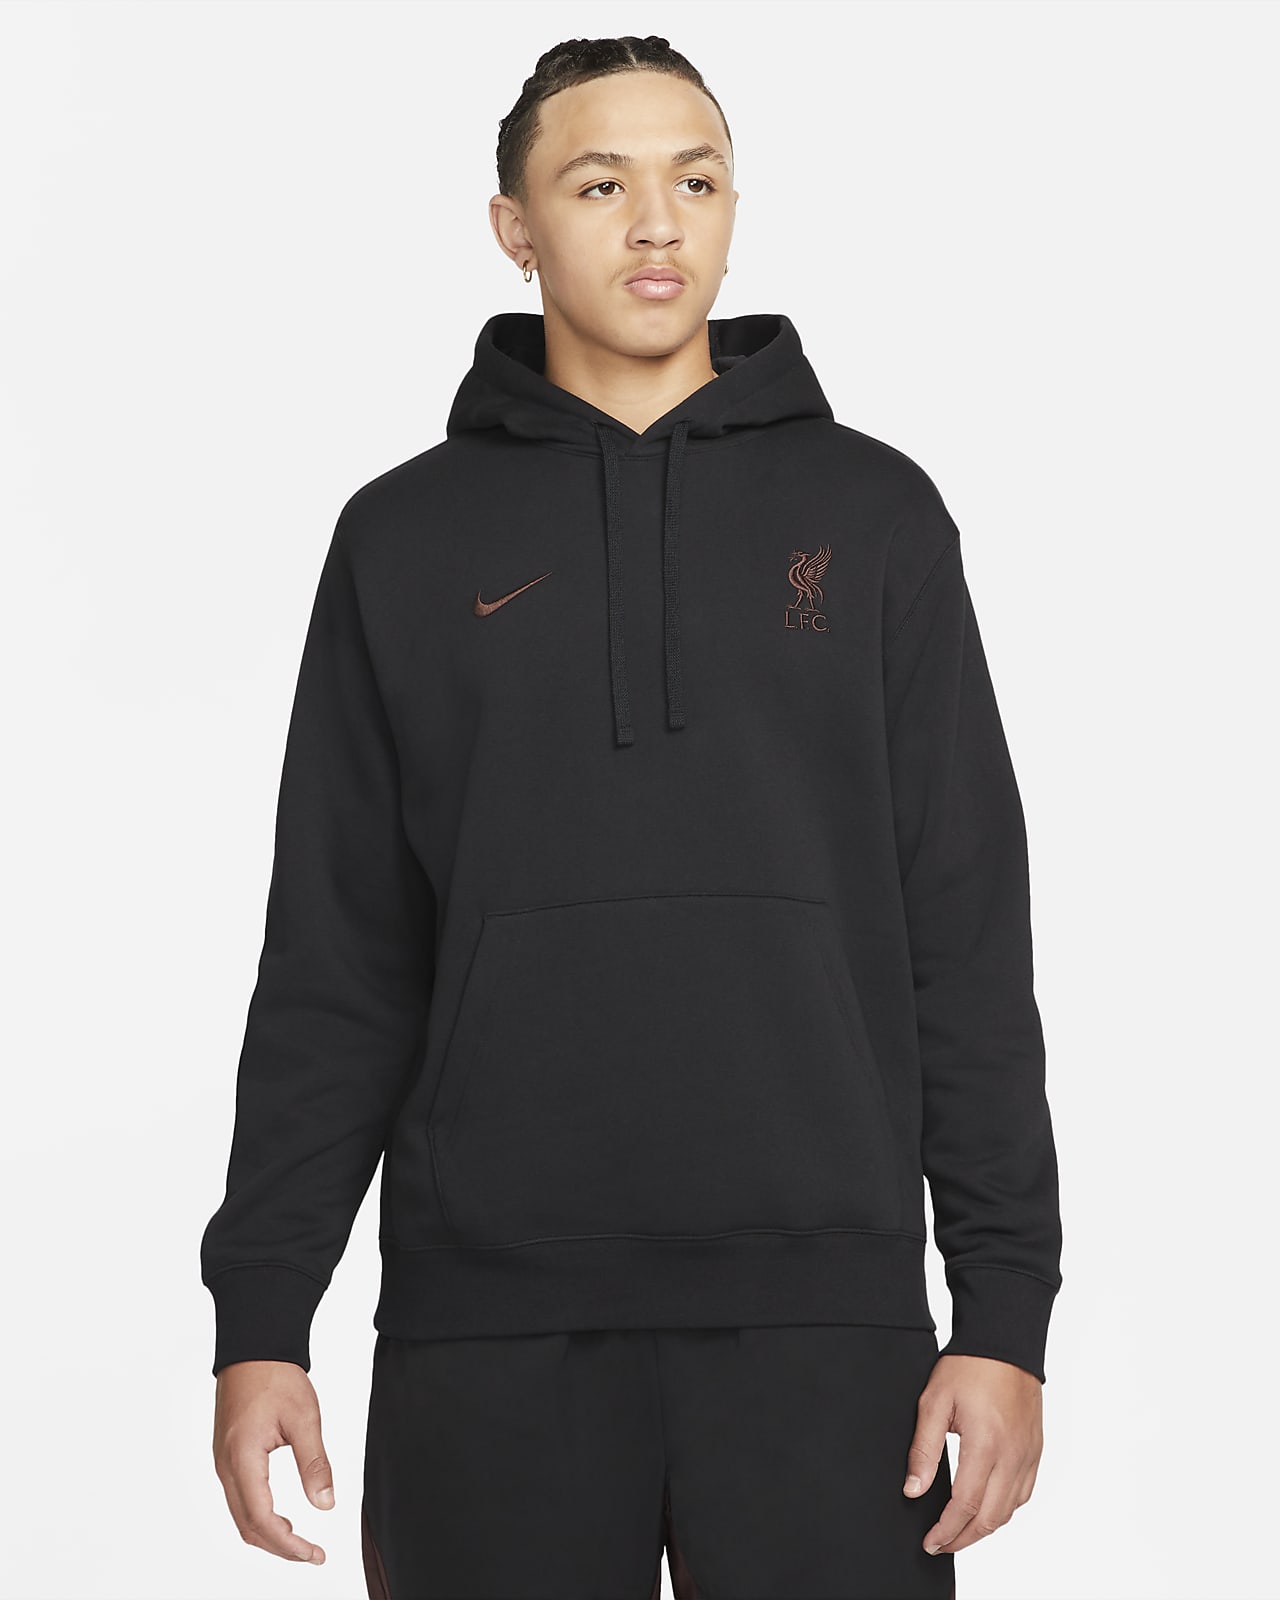 Liverpool FC Mens Grey Zip Through Fleece Sweater LFC Official